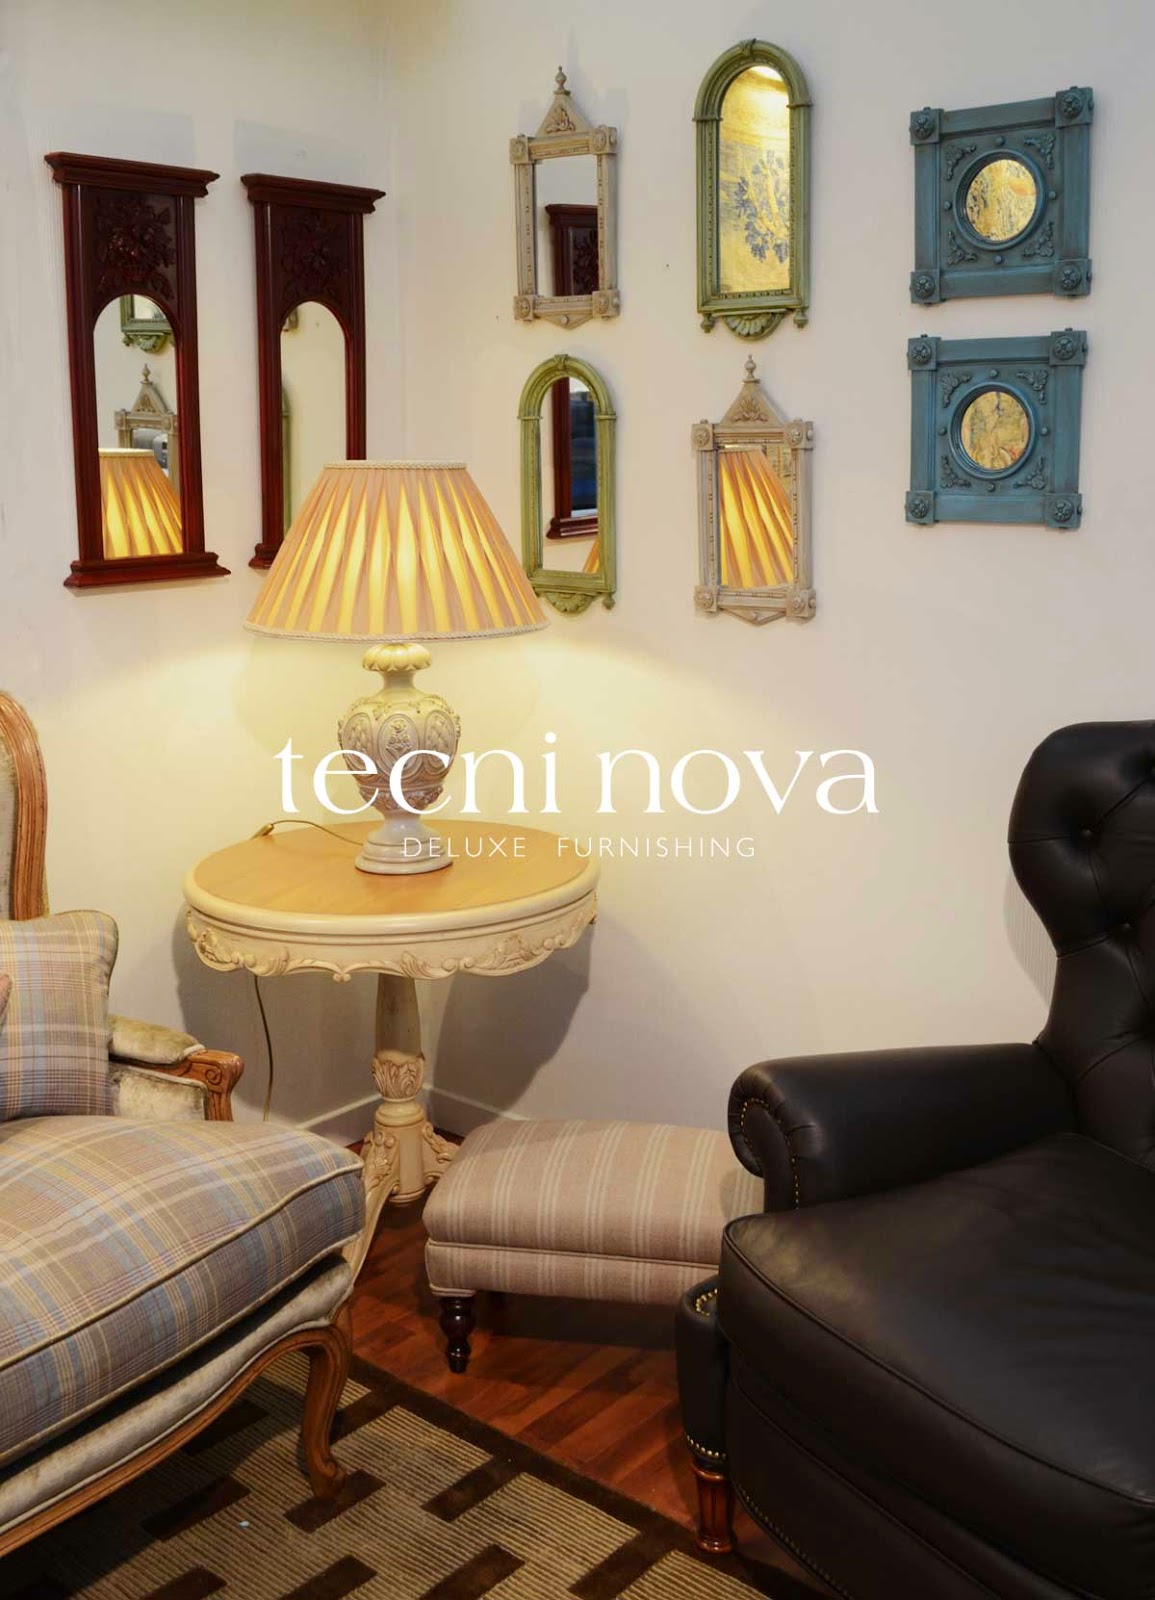 tecninova-deluxe-furnishing-luxury-furniture-muebles-lujo-diseño-country-style-countryside-cottage-campigna-deco-interior-design-estilo- diseño-vanguardia-trend-innovation-FMyecla-2014-upholstery-tapizado